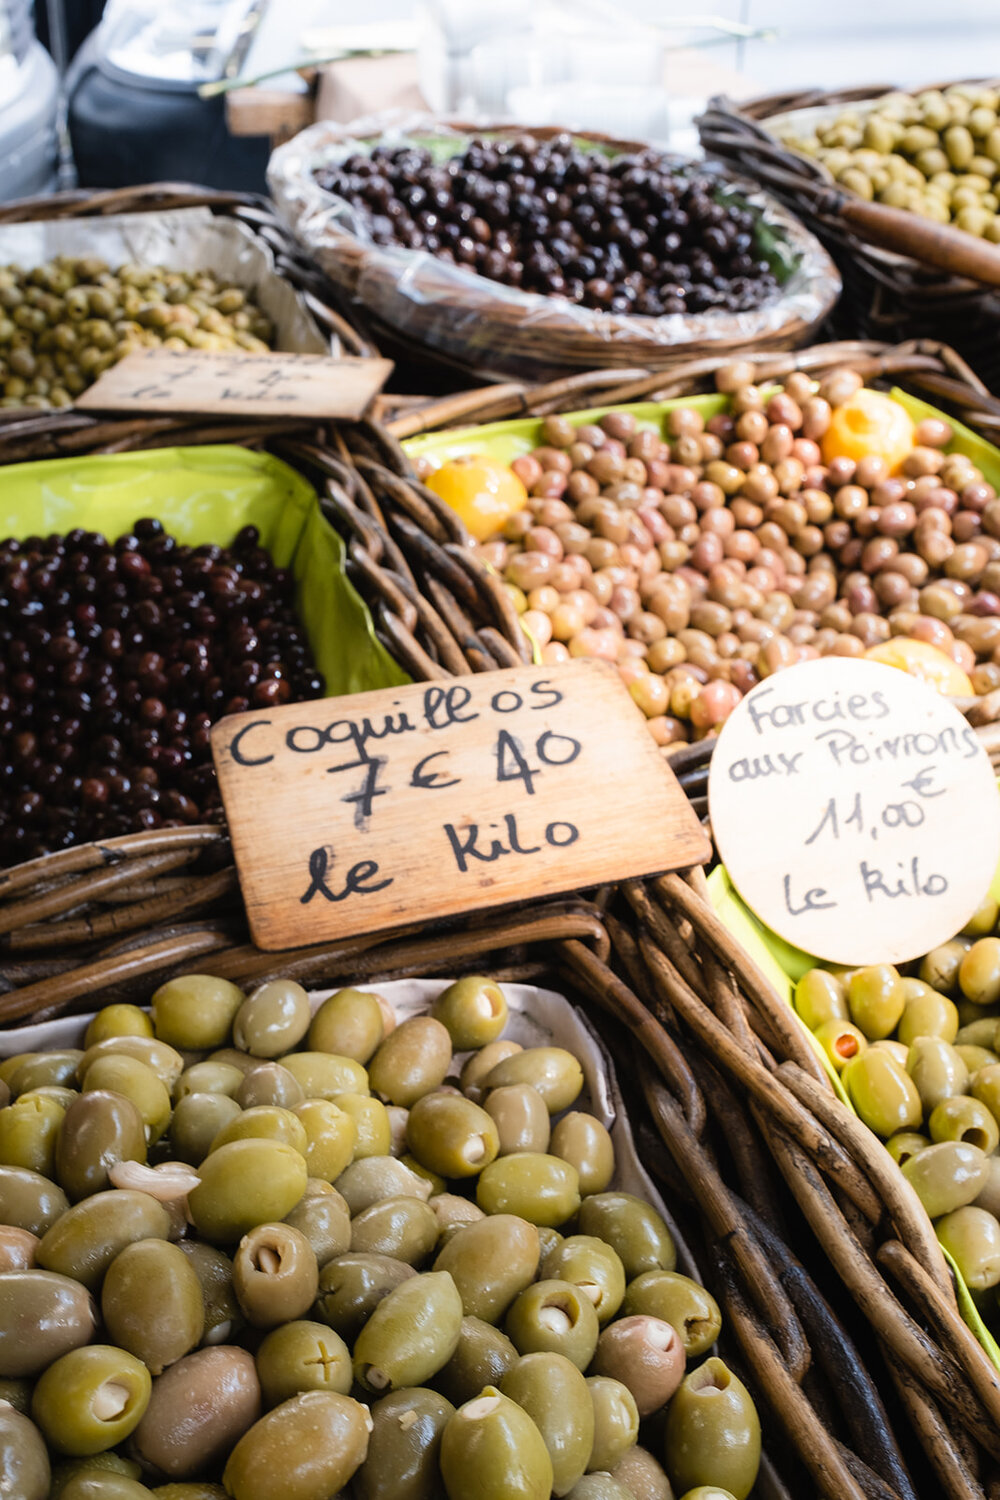 Olives for sale at a market in Arles